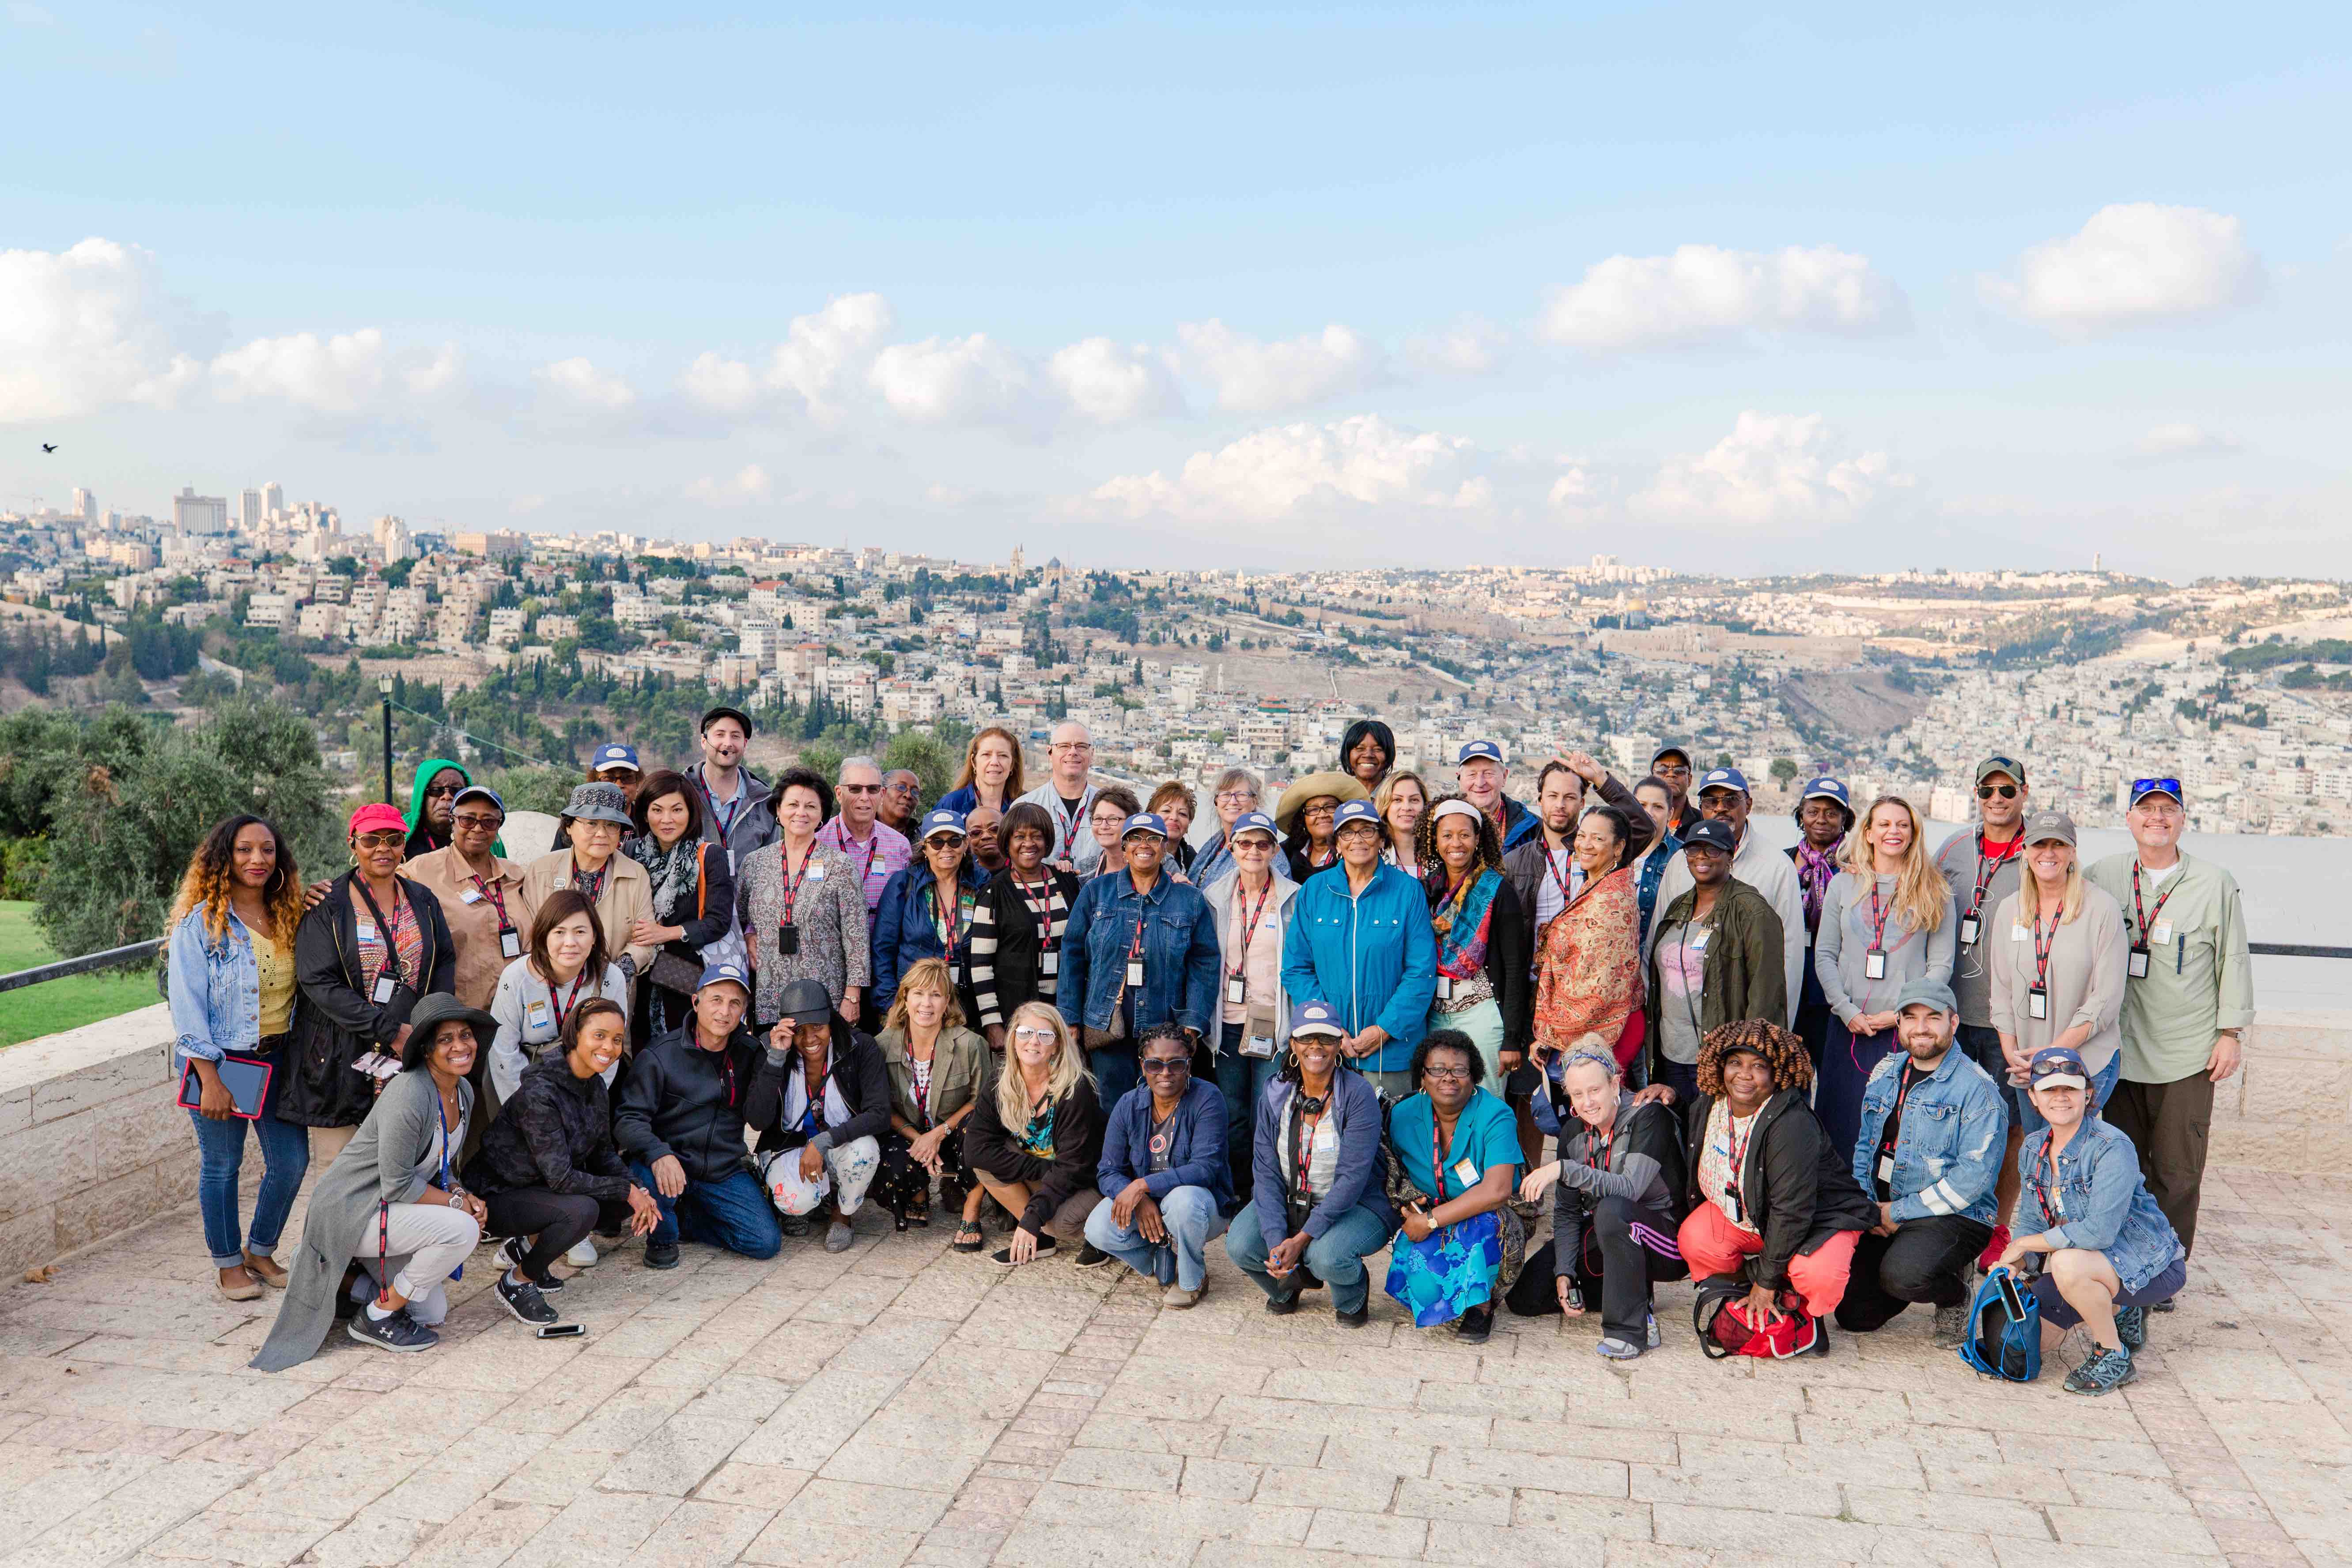 A fun-loving group of Inspiration travelers viewing Jerusalem, Israel